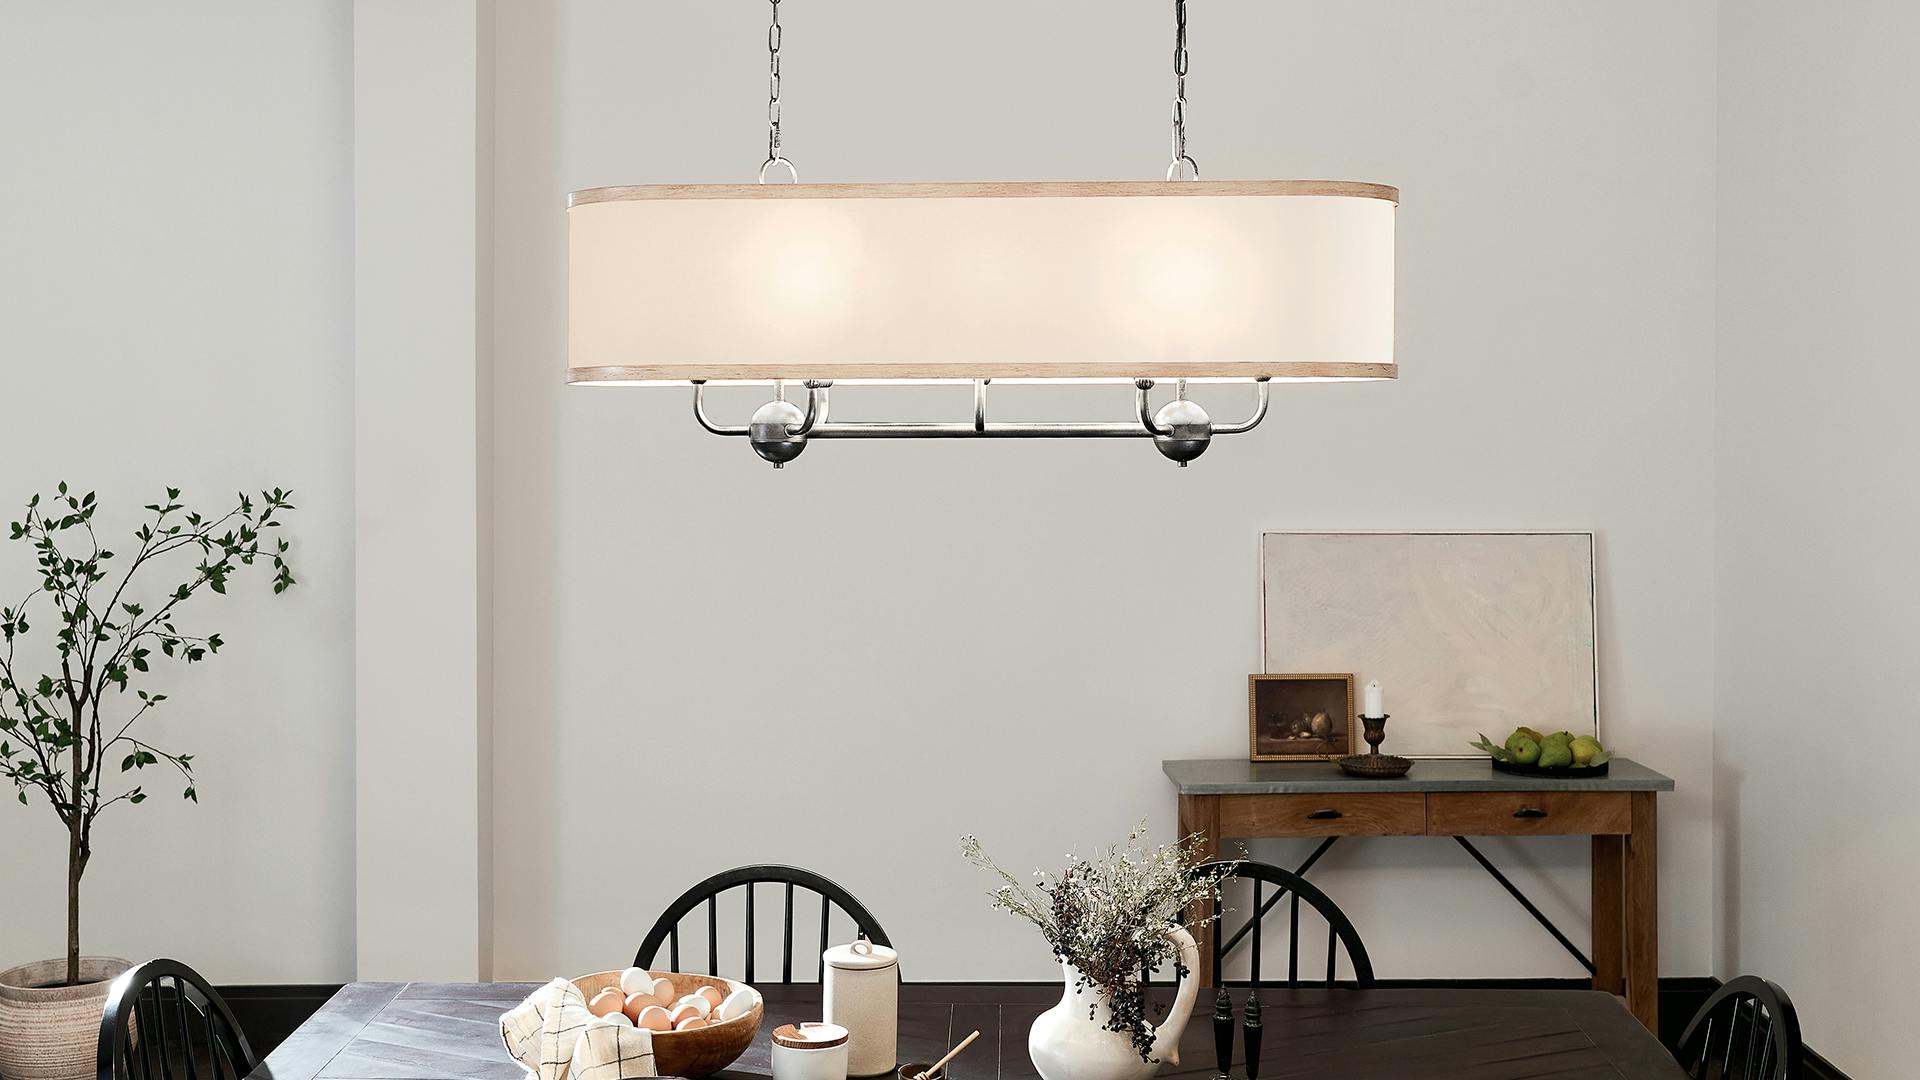 Heddle 8 light Linear Chandelier hanging over dining room table